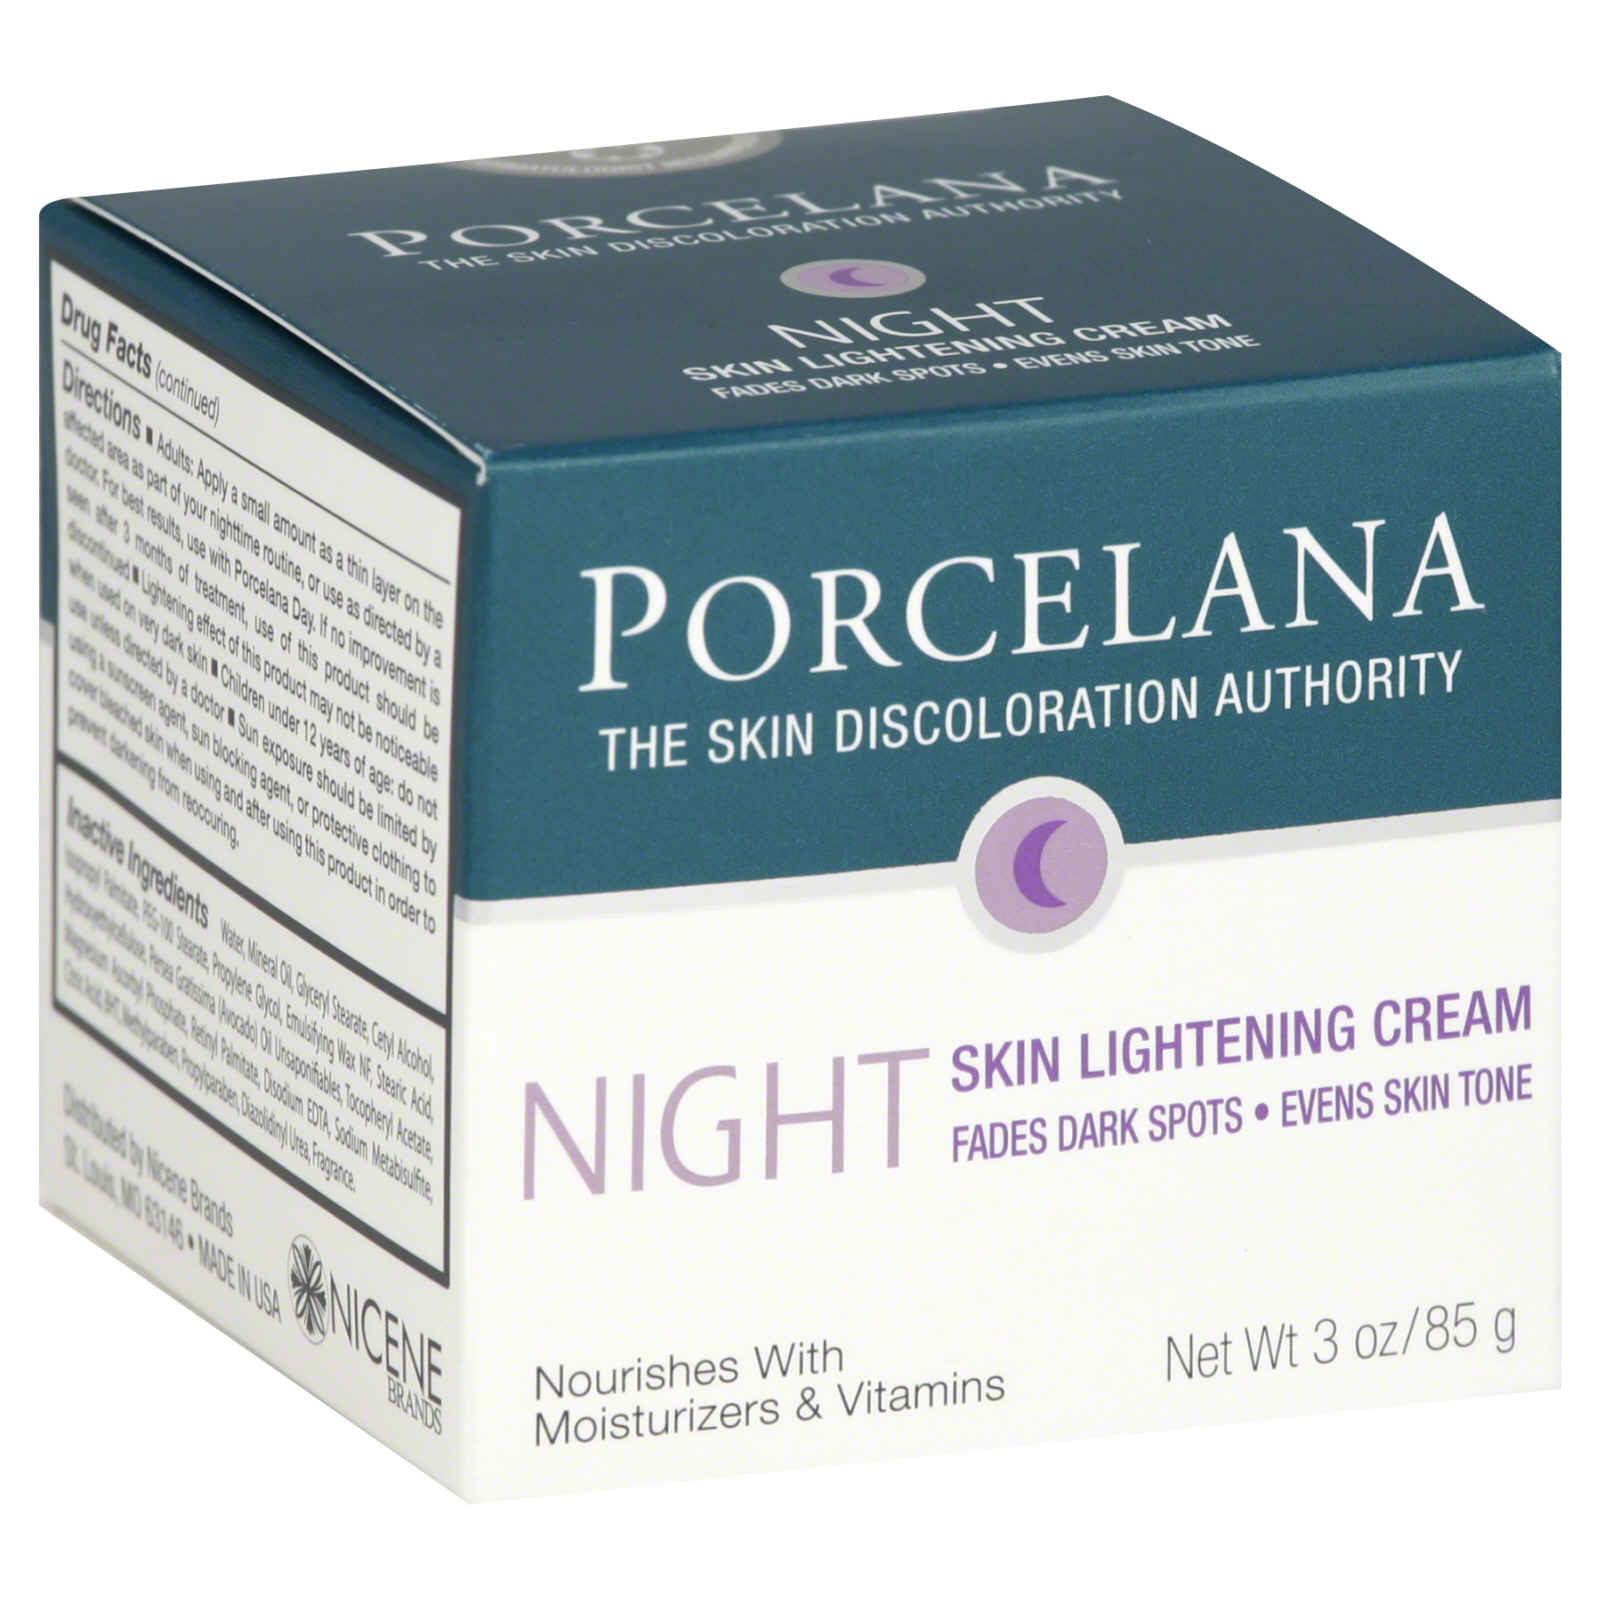 Porcelana Skin Lightening Cream, Night Treatment, Fades Dark Spots, 3 oz (85 g)